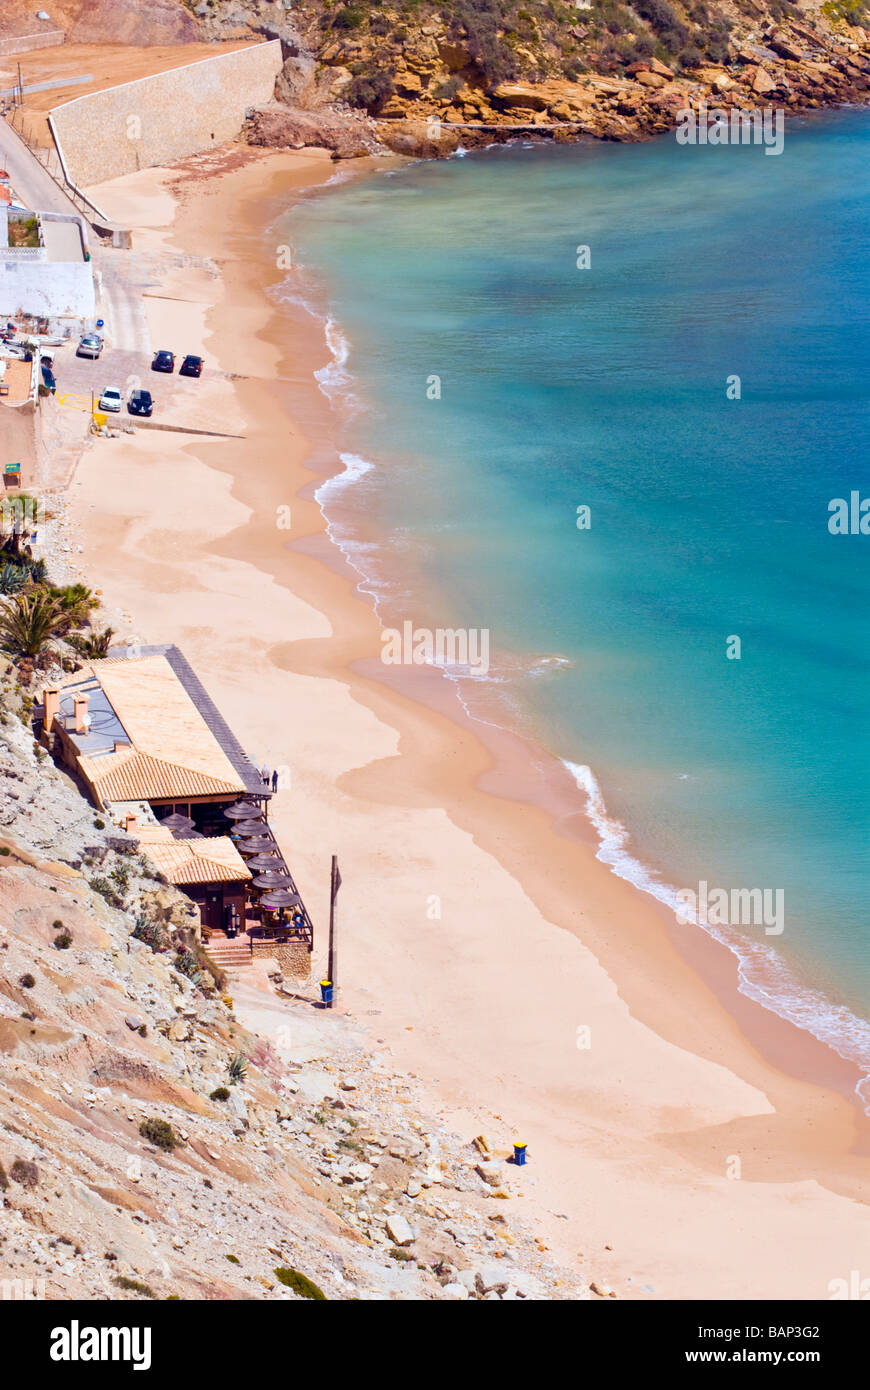 The beach at Burgau, Algarve, Portugal Stock Photo